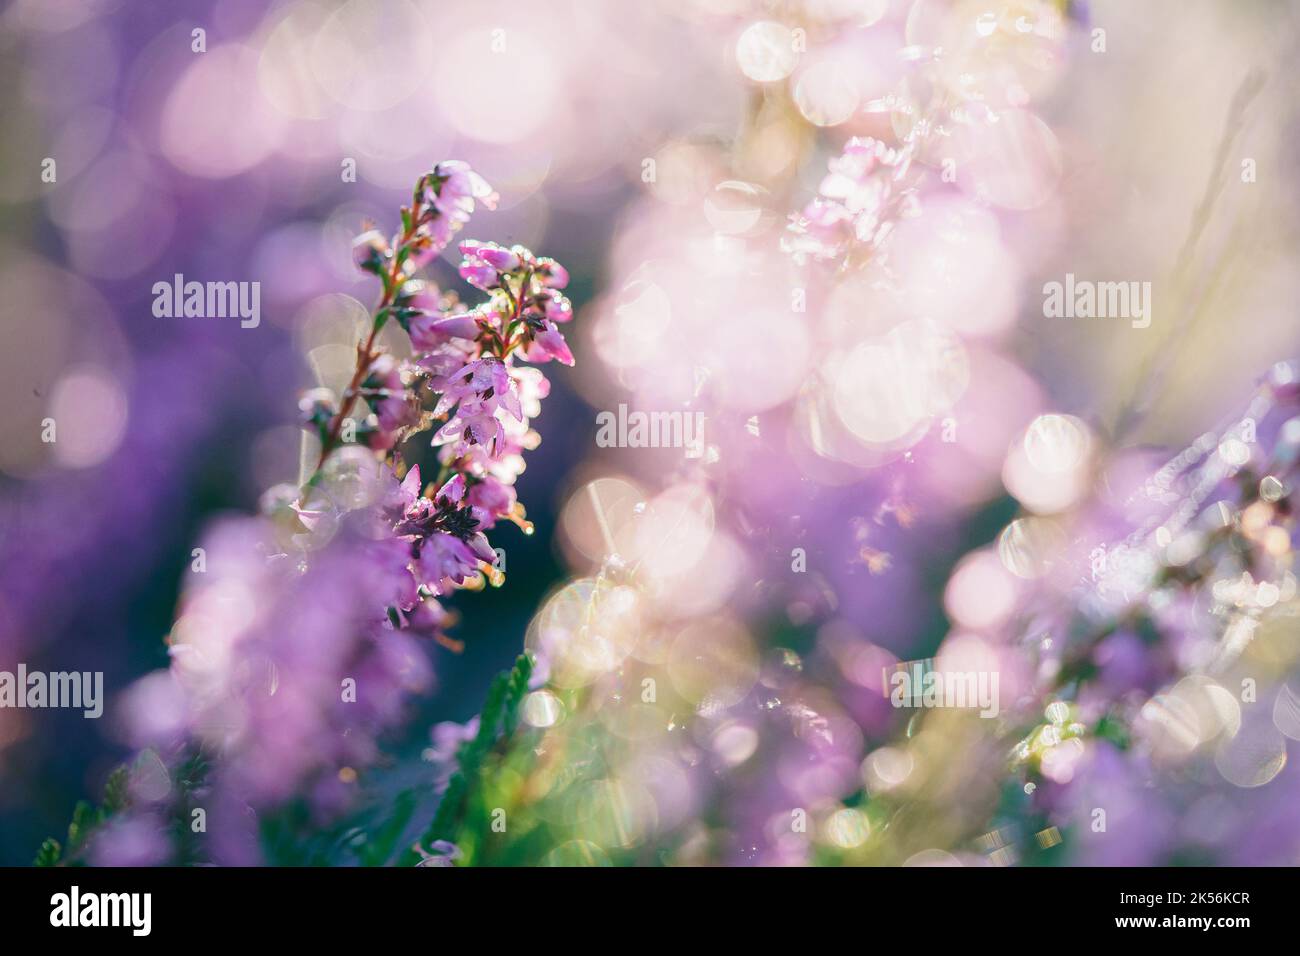 Blooming wild fairy blue common heather (Calluna vulgaris). Nature, floral, flowers background. Stock Photo